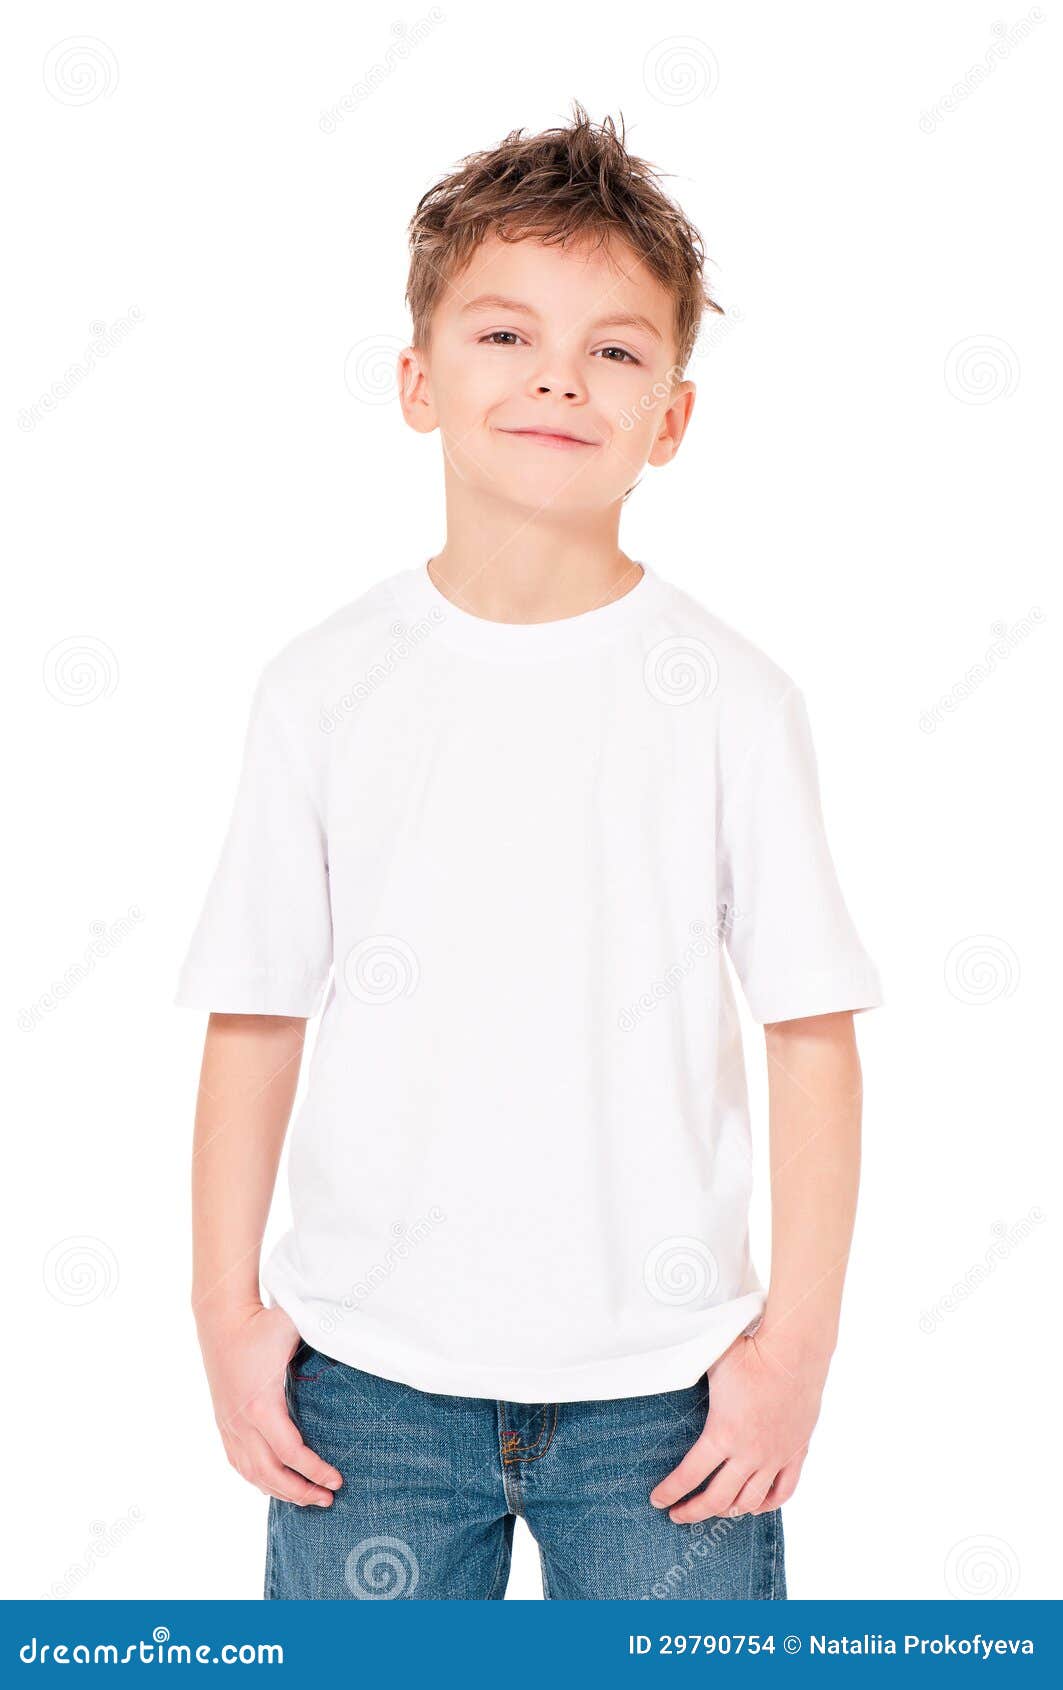 t-shirt on boy